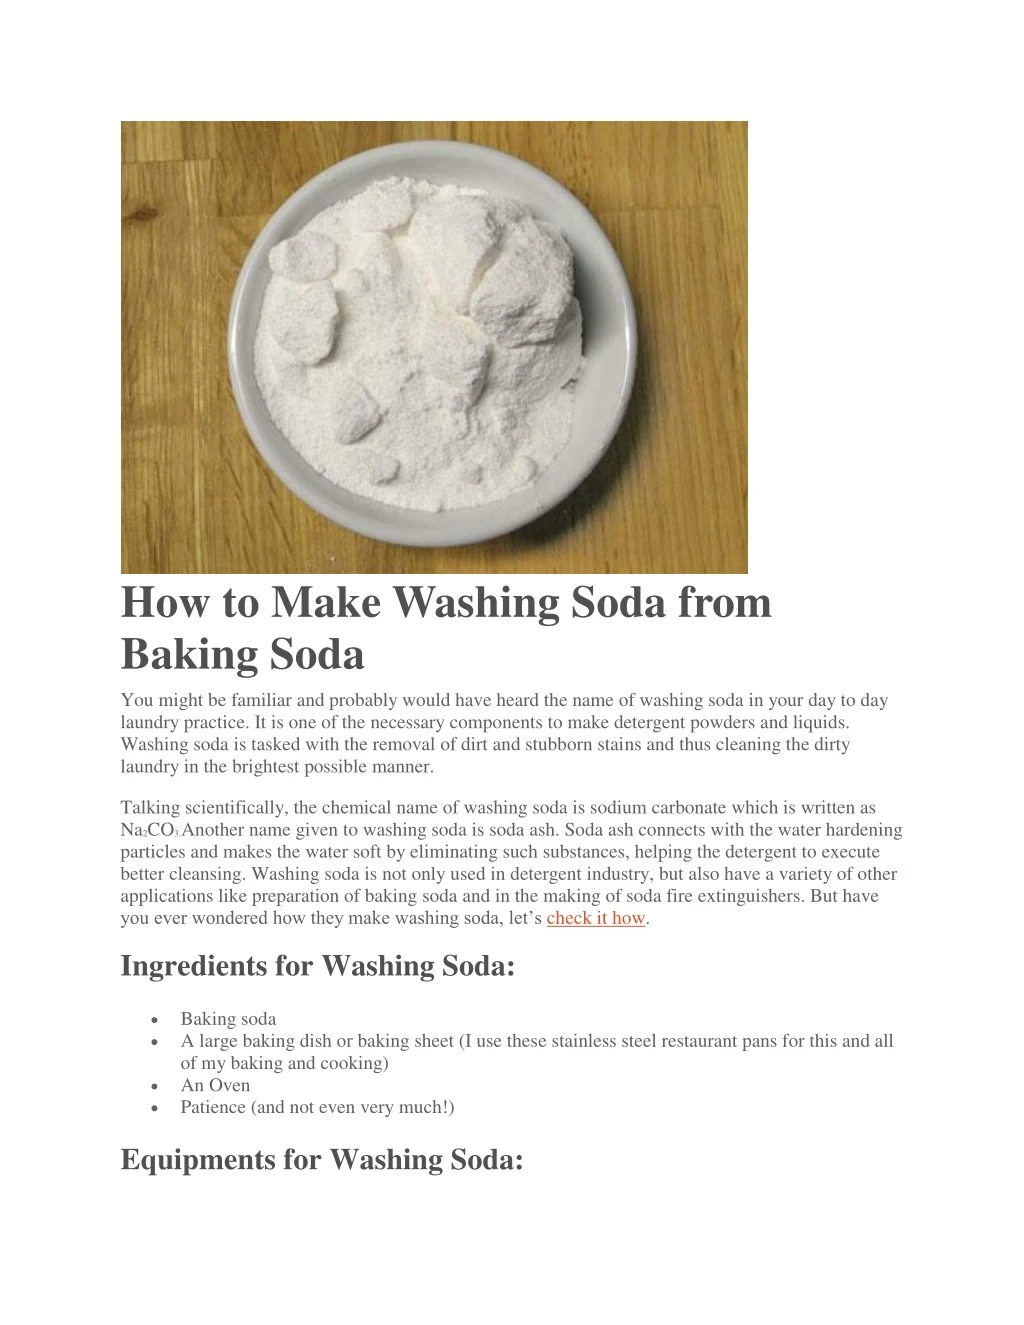 how to make washing soda from baking soda